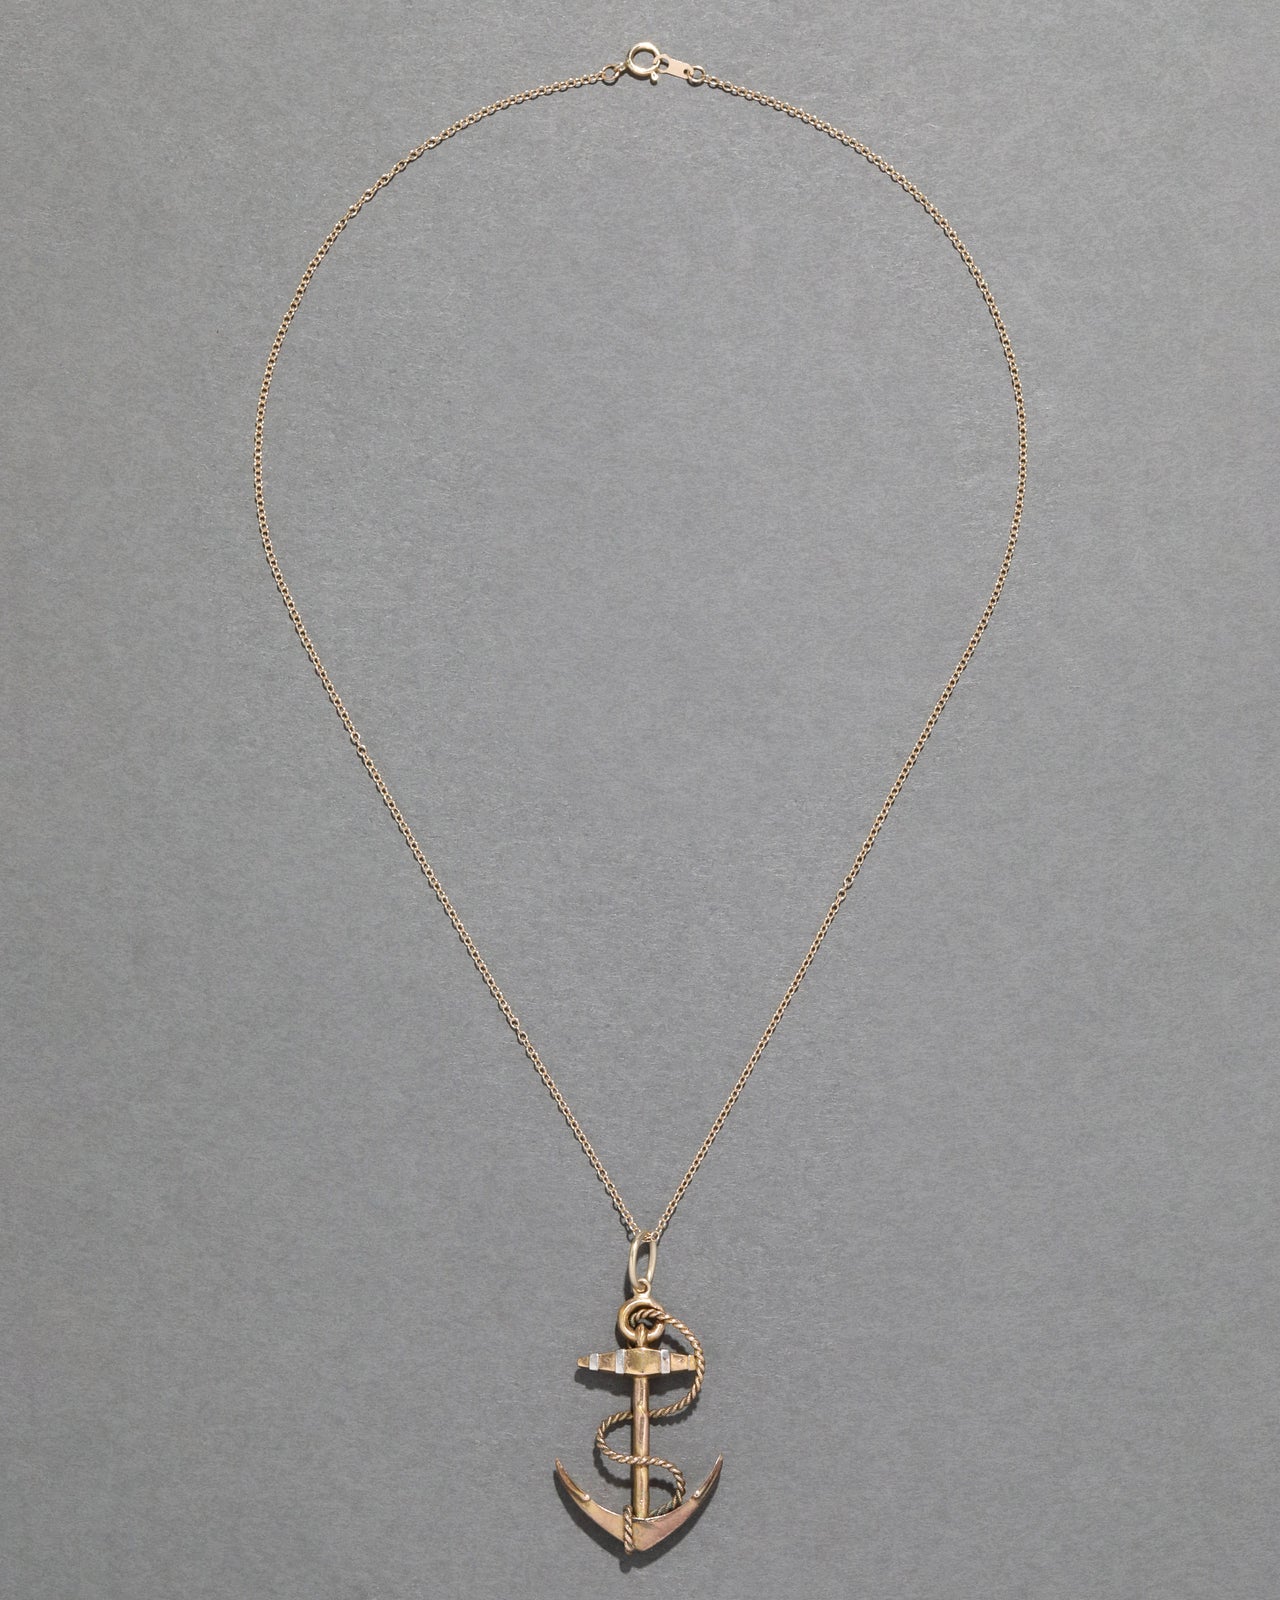 Antique 1880s 14k Two Tone Gold Anchor Pendant Necklace - Photo 2